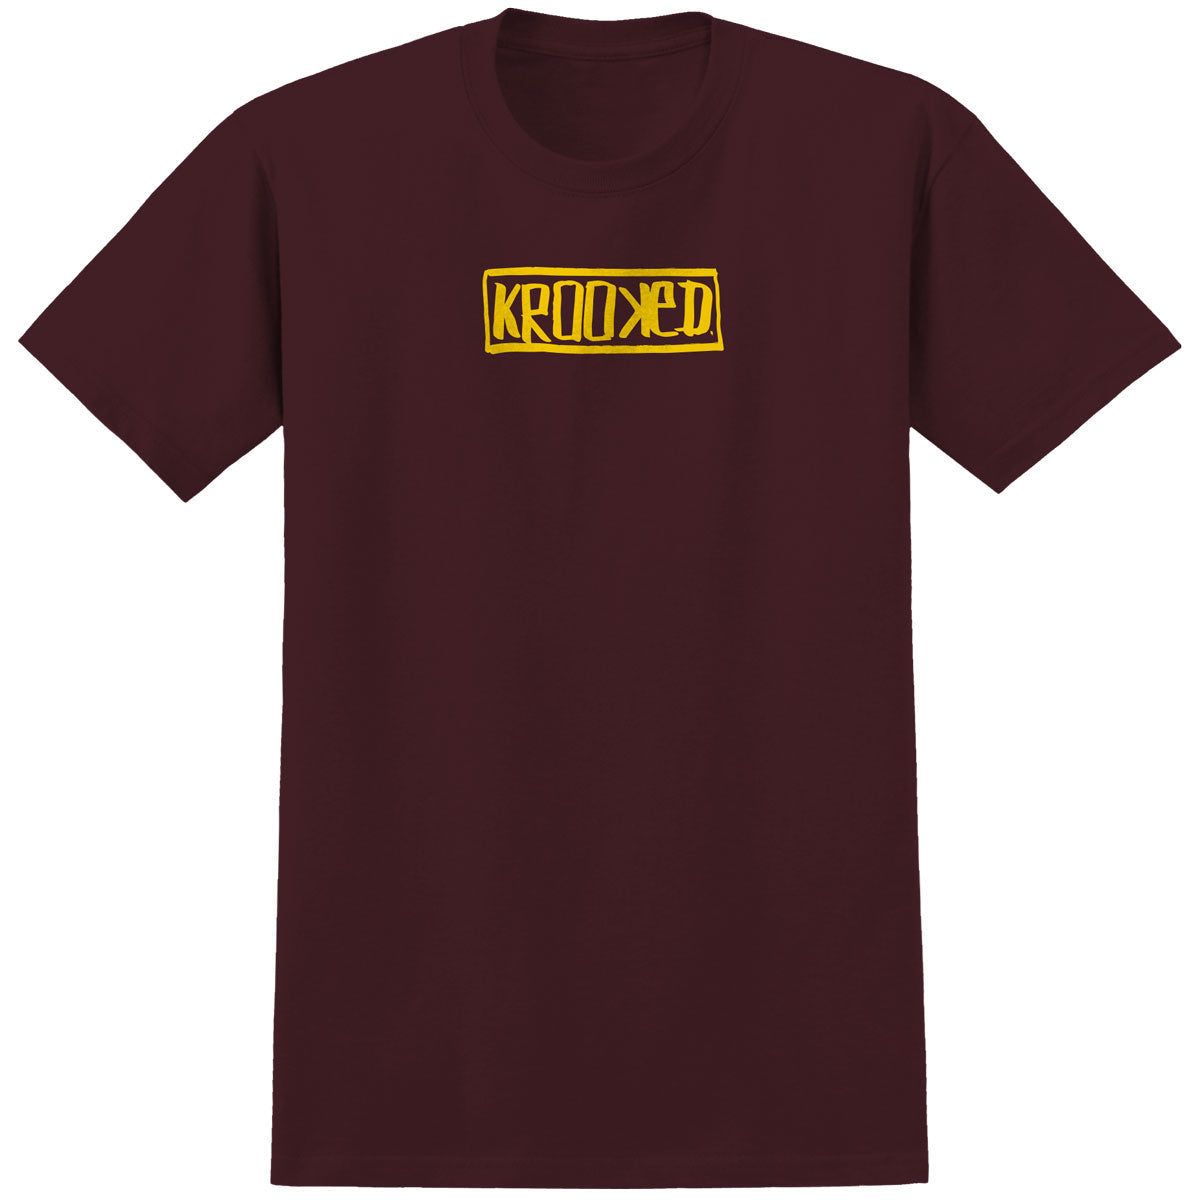 Krooked Box T-Shirt - Maroon/Yellow image 1